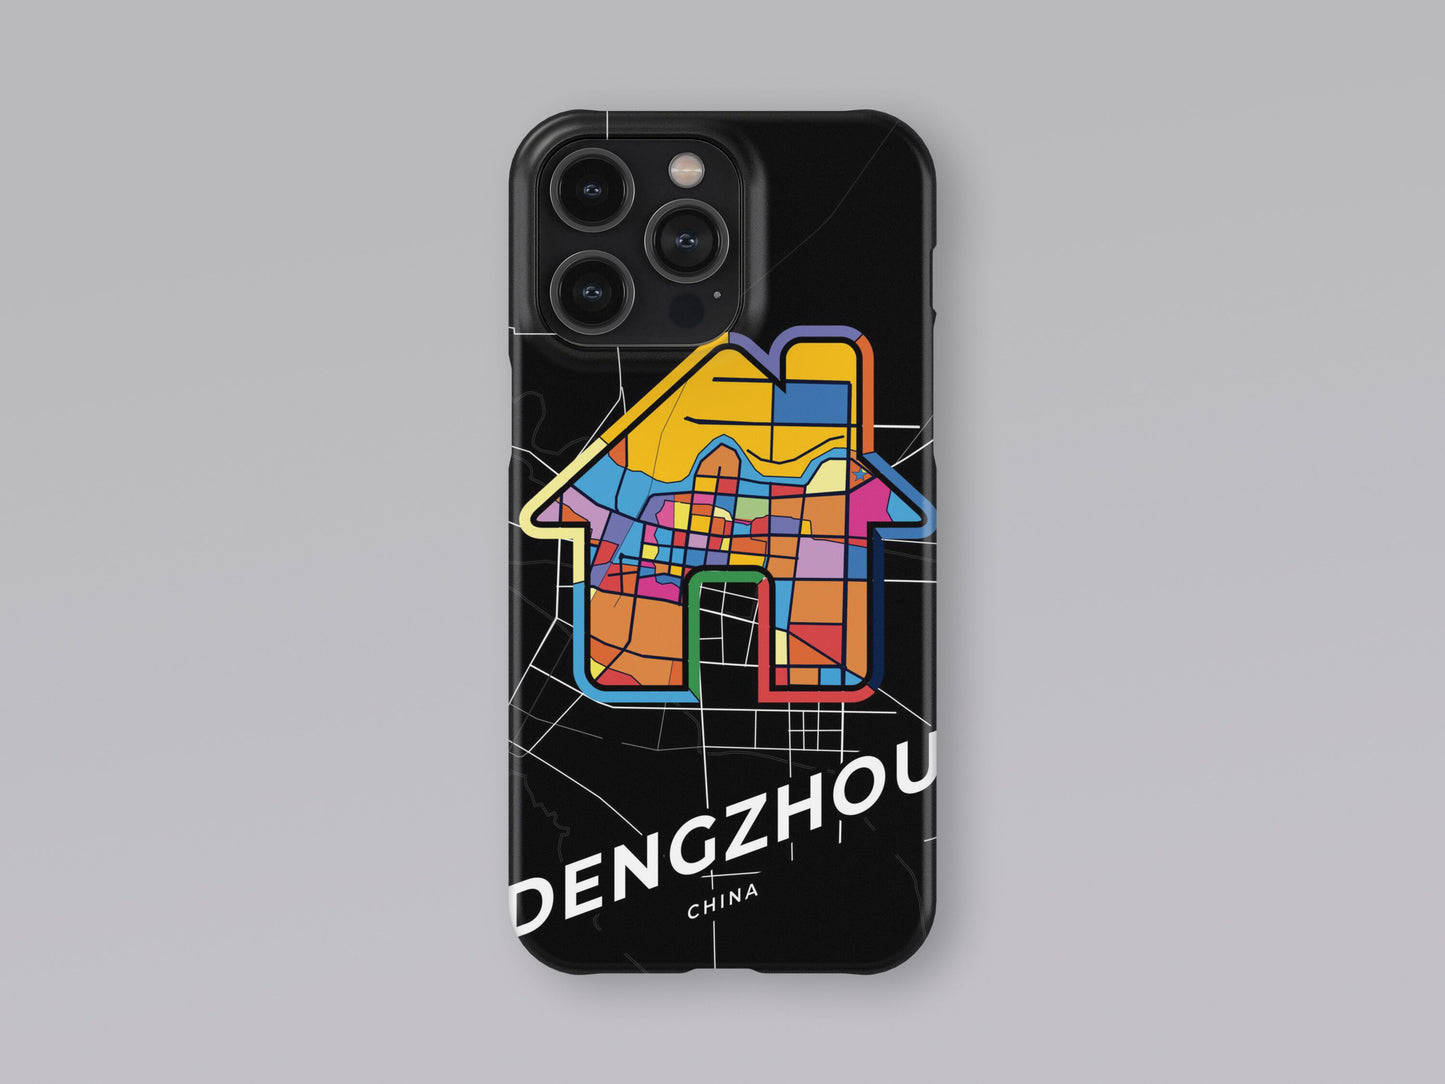 Dengzhou China slim phone case with colorful icon. Birthday, wedding or housewarming gift. Couple match cases. 3